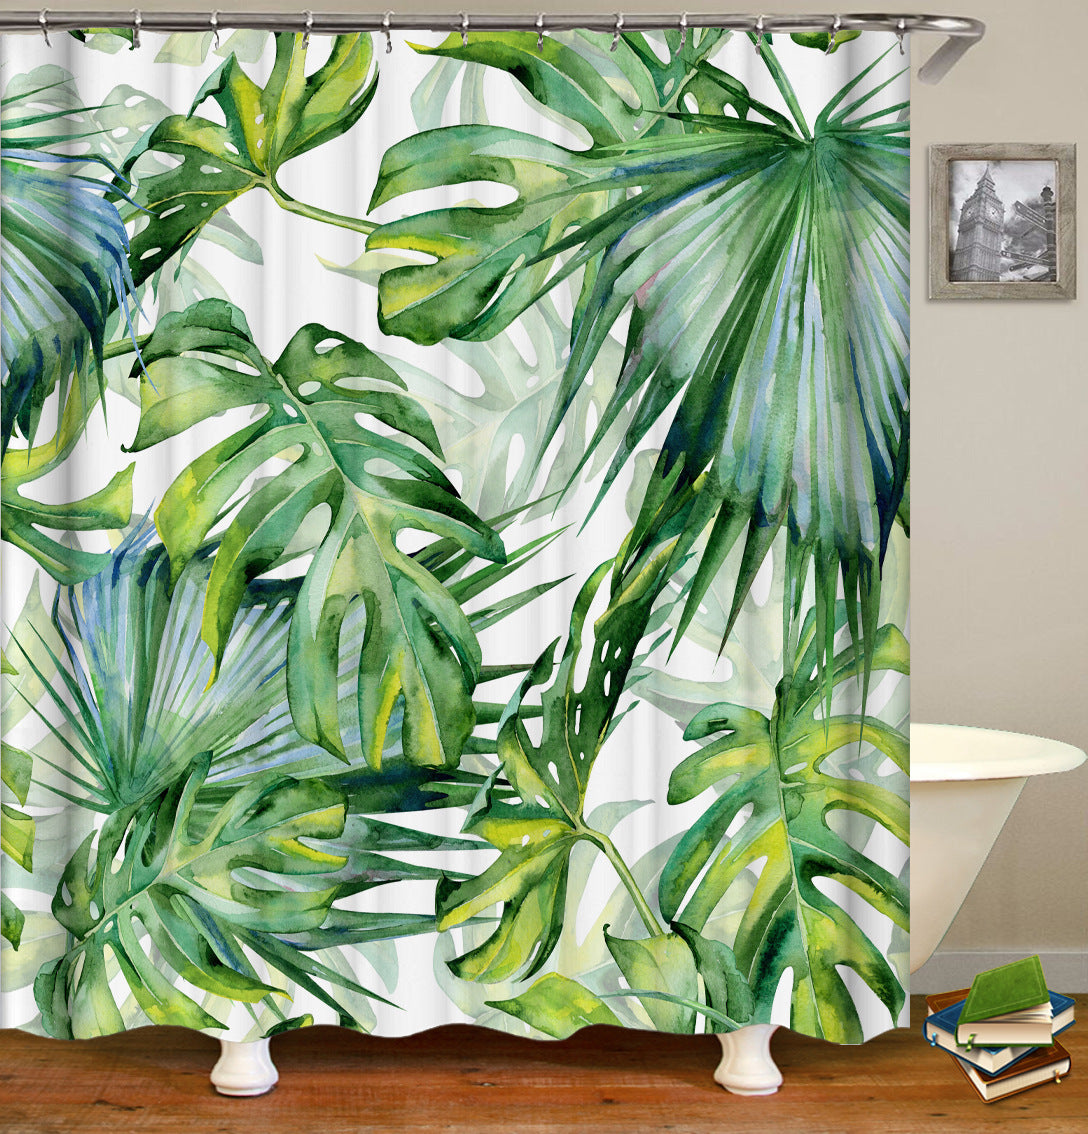 Tropical Plants Bath Curtain Decor - blitz-styles